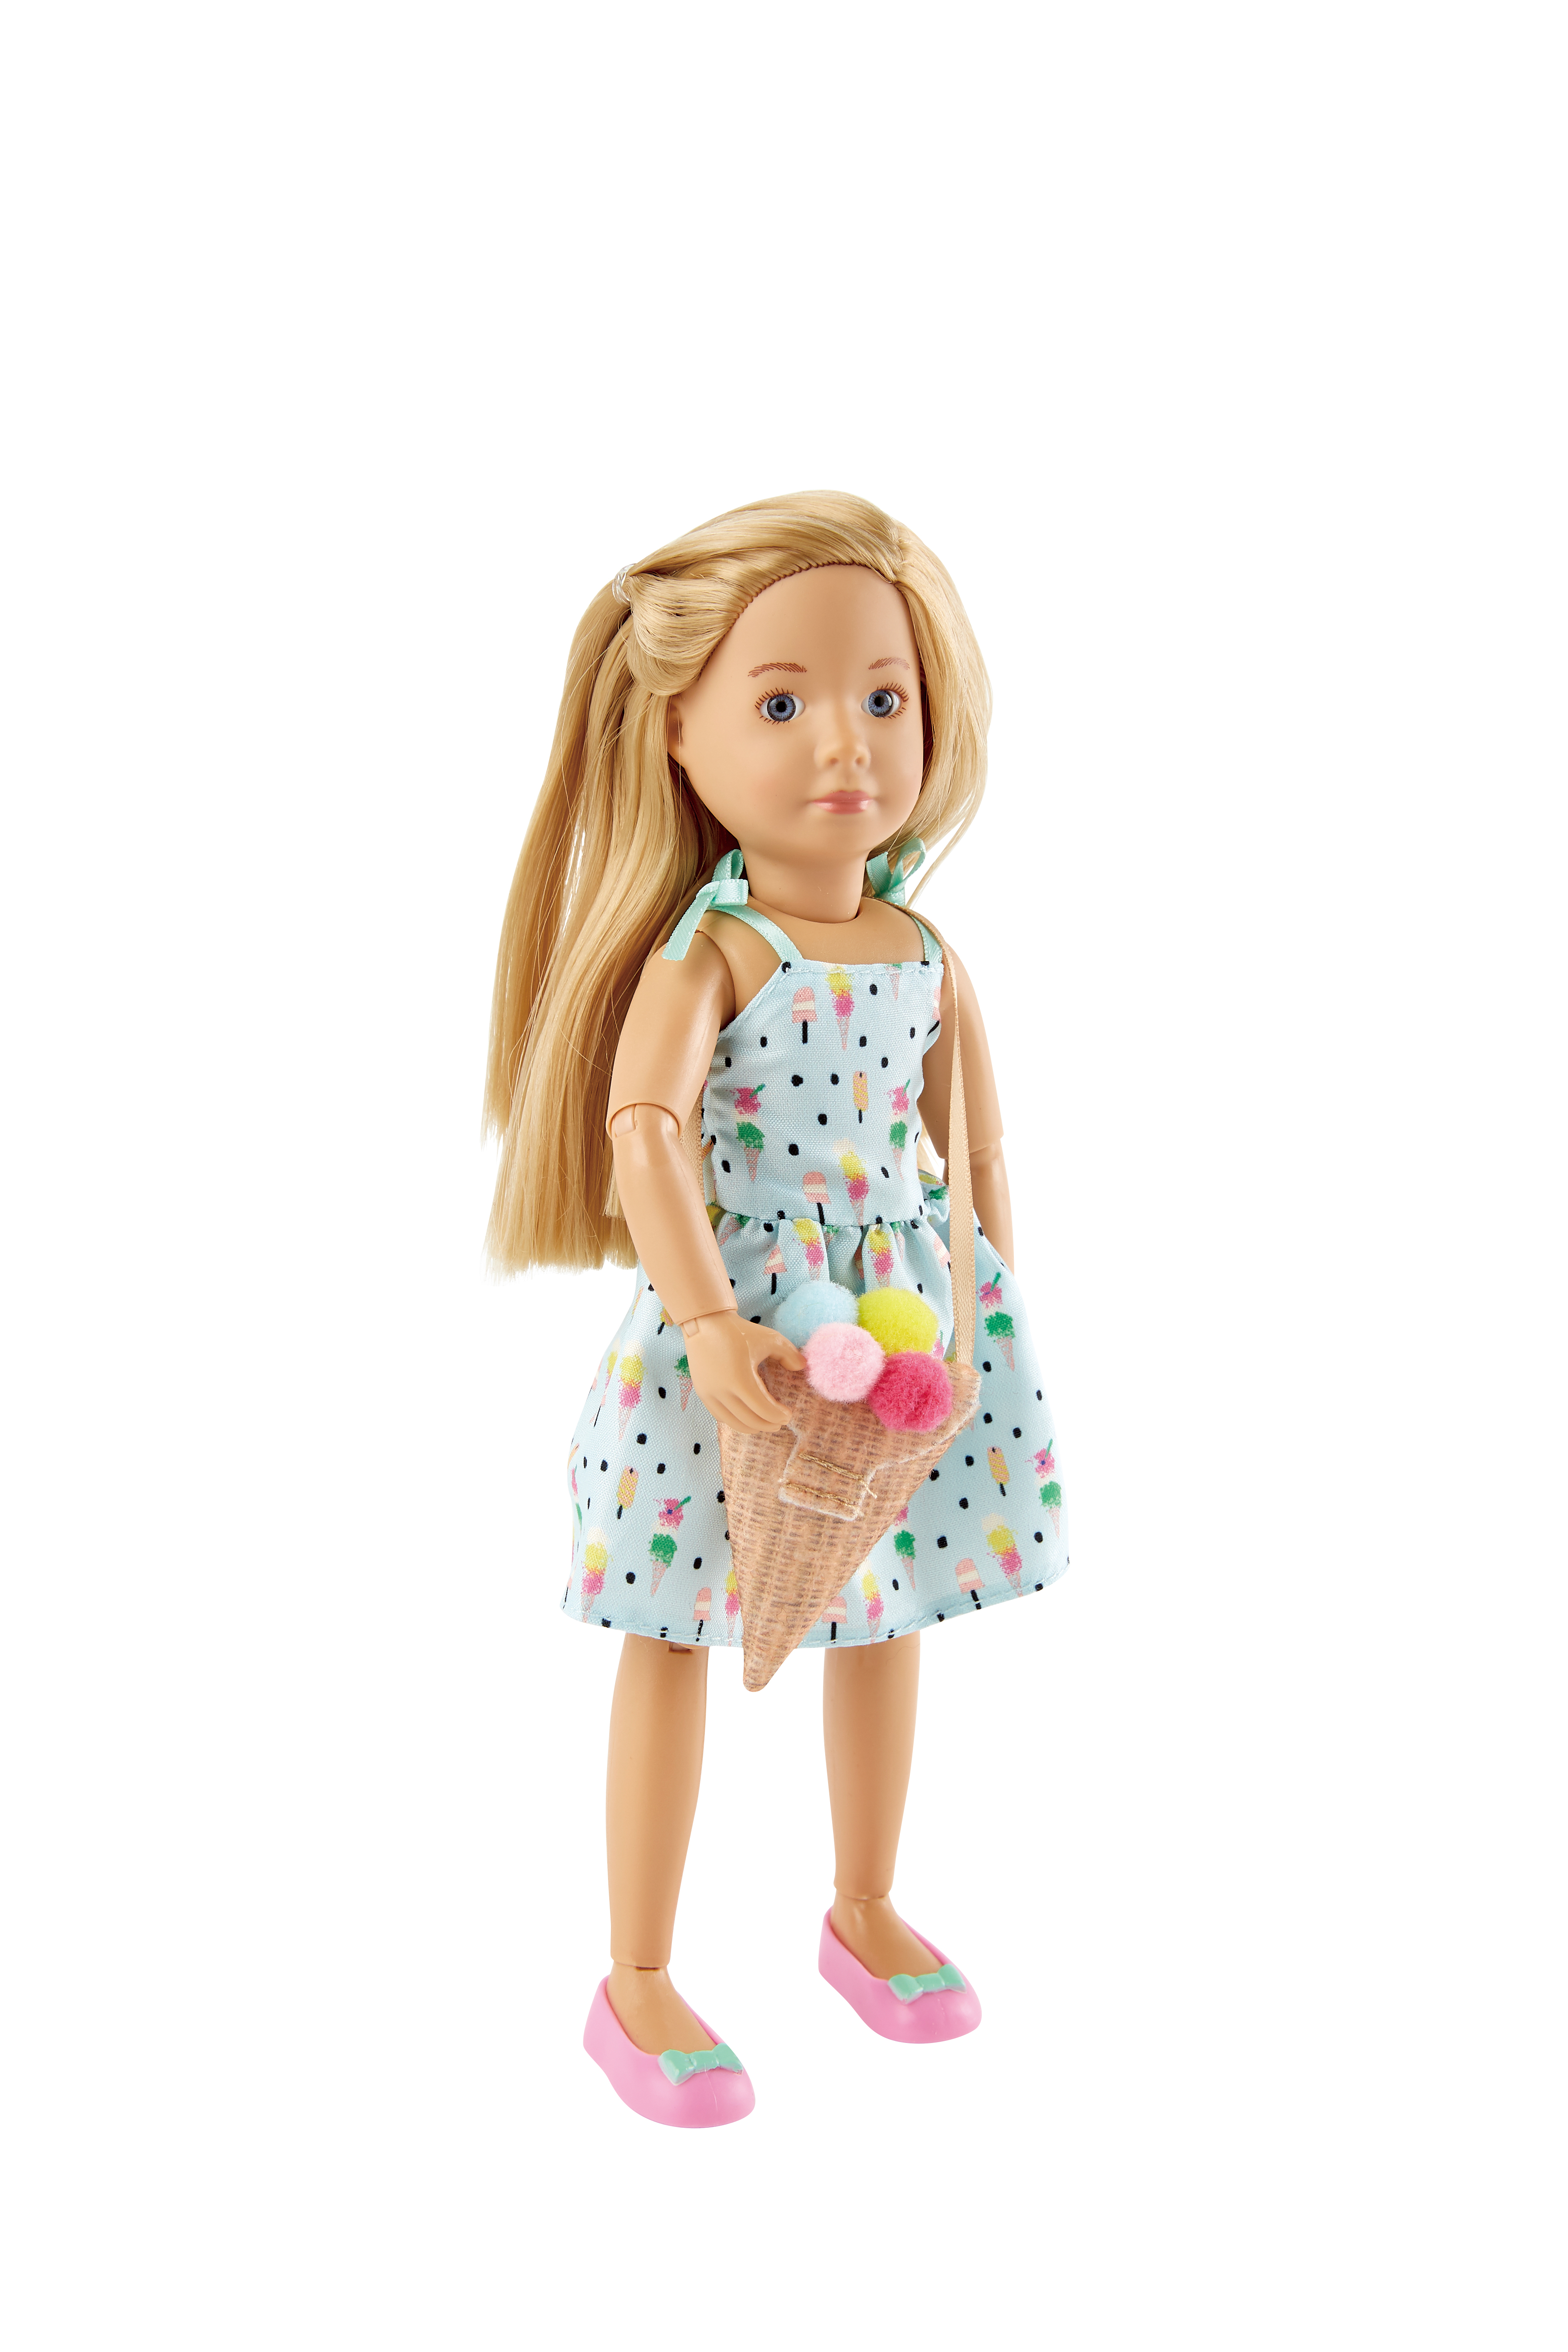 Кукла Вера Kruselings в сарафане и с сумкой-мороженое, 23 см, арт. 0126872